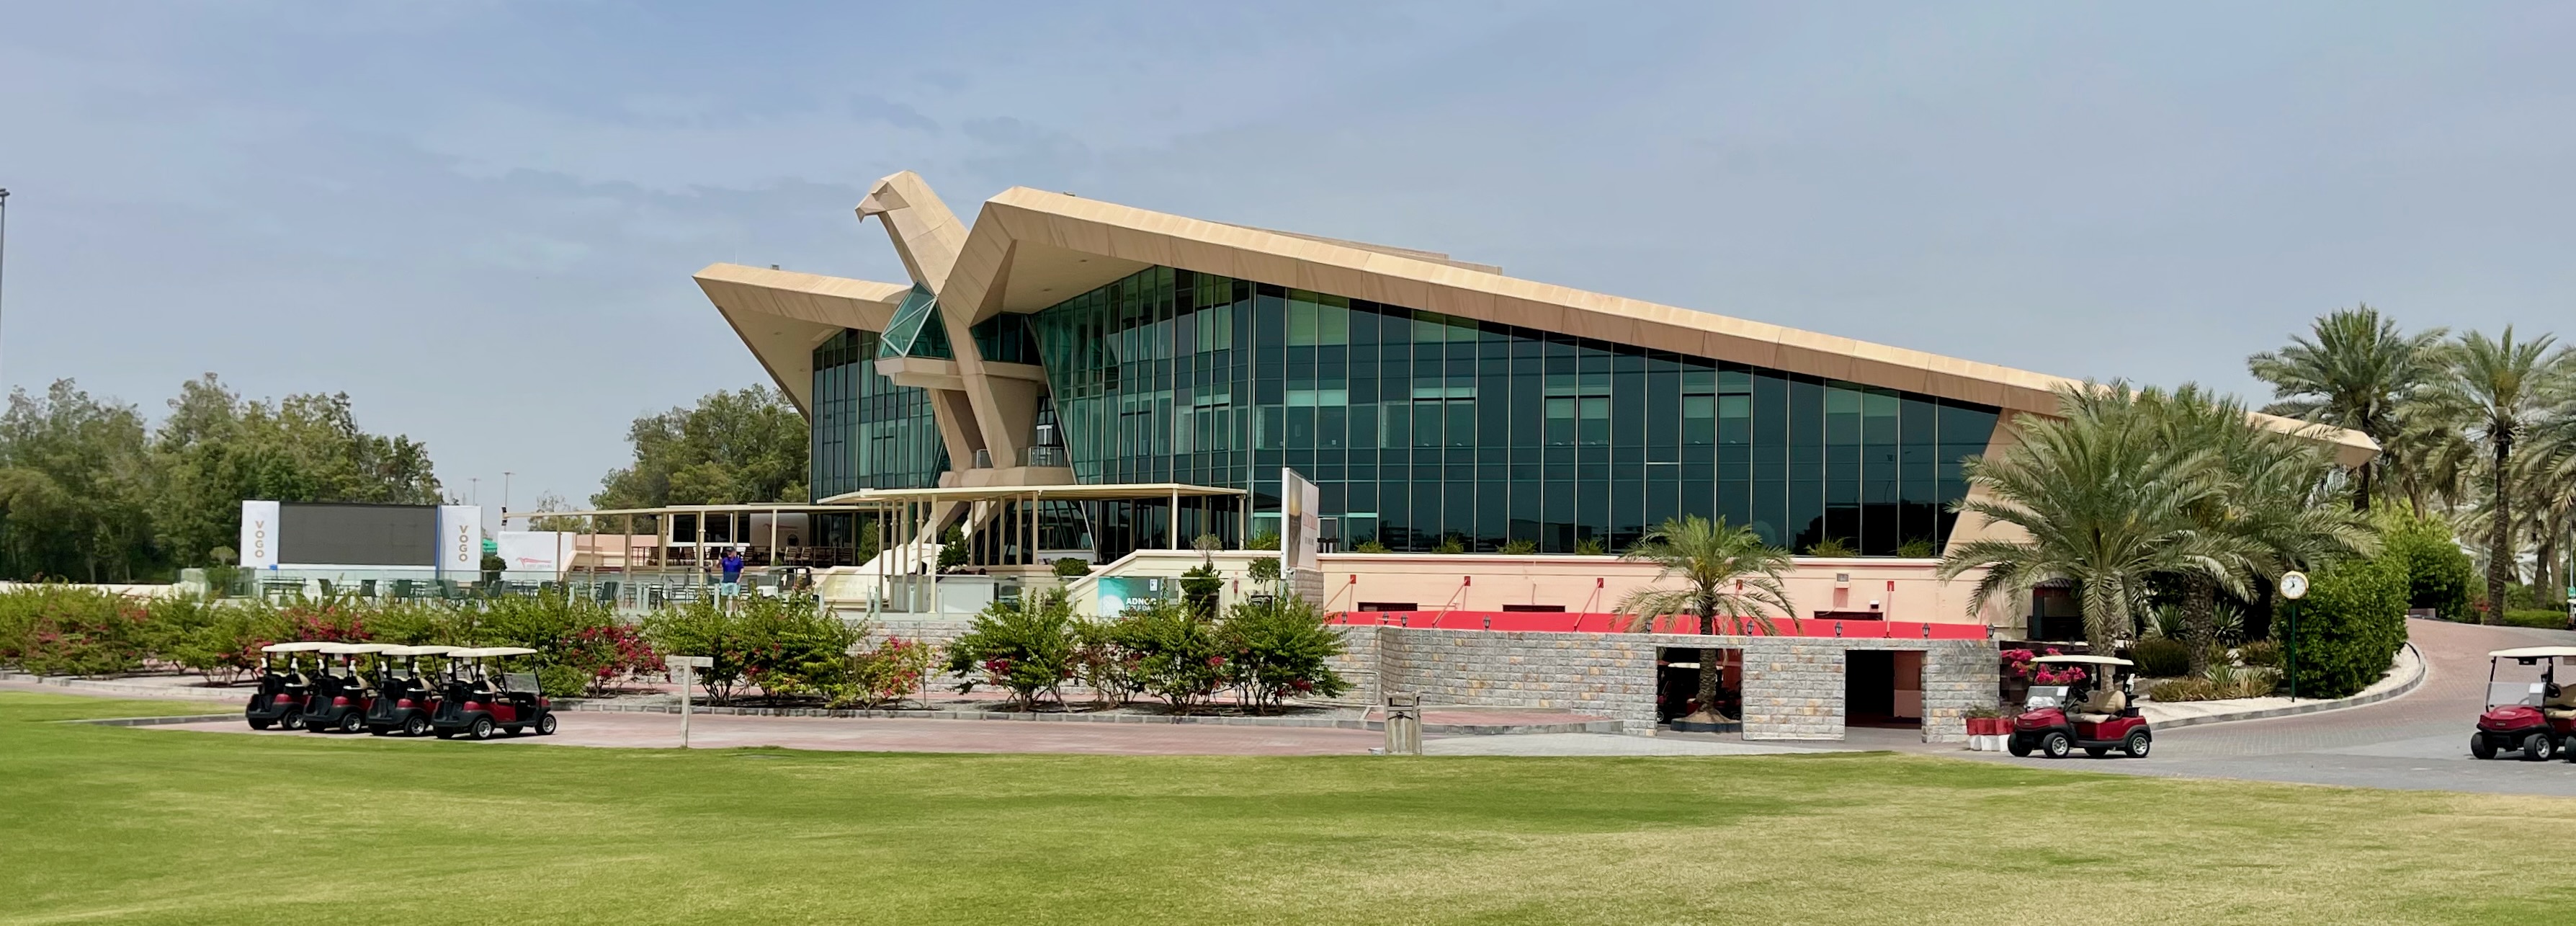 Abu Dhabi GC- the iconic clubhouse